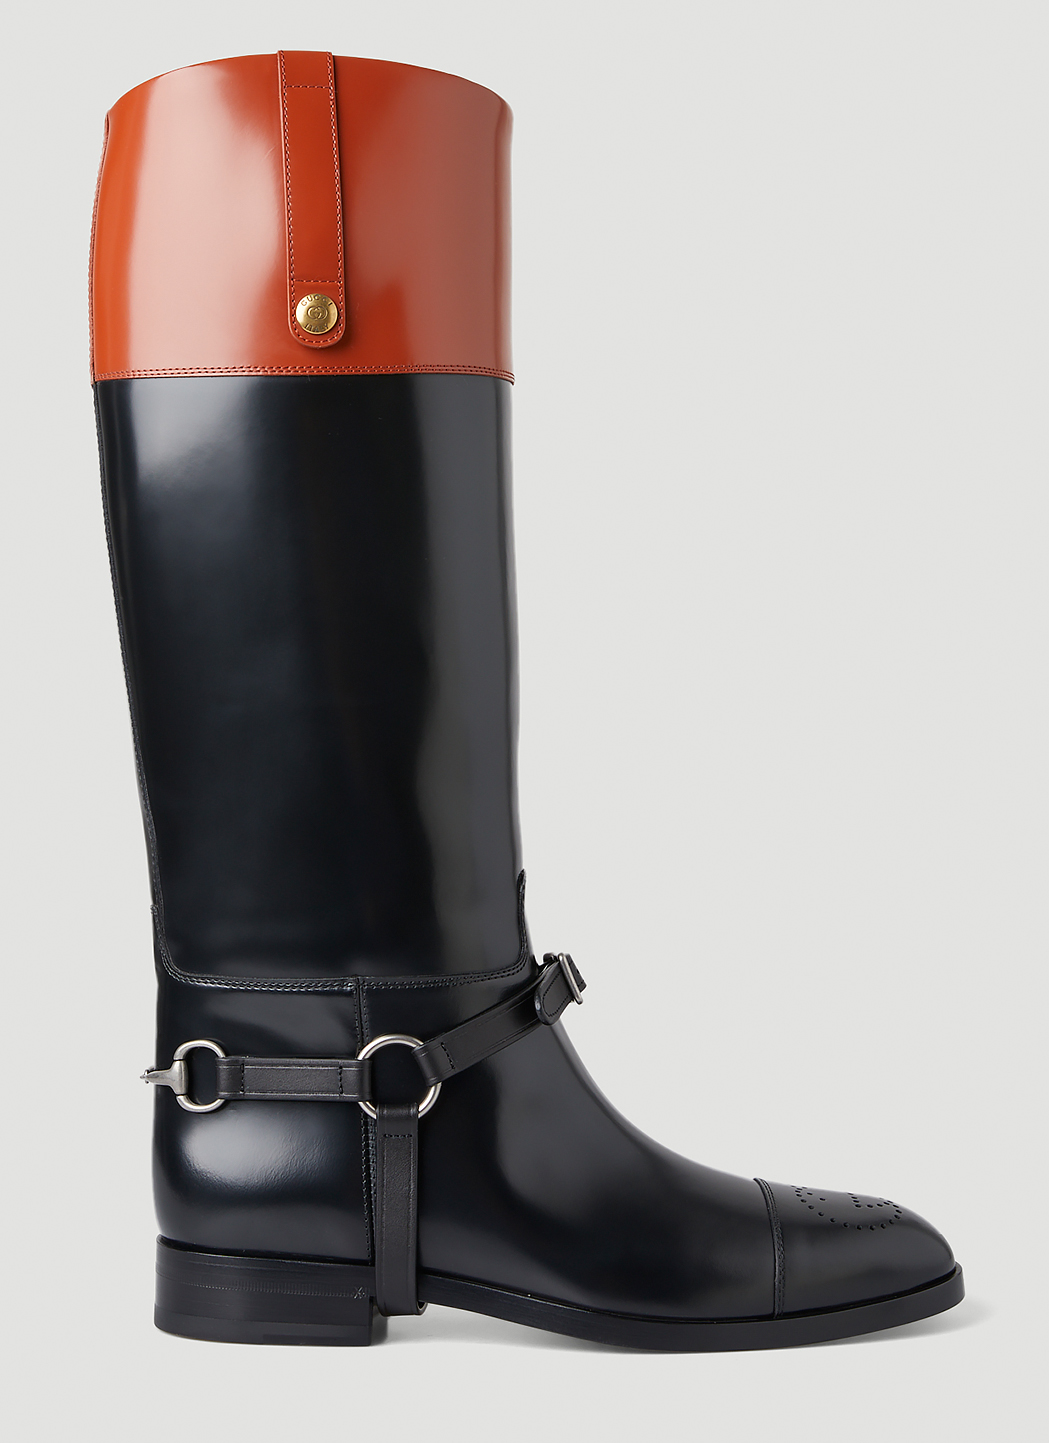 Gucci Men's Zelda Harness Knee High Riding Boots in Black | LN-CC®